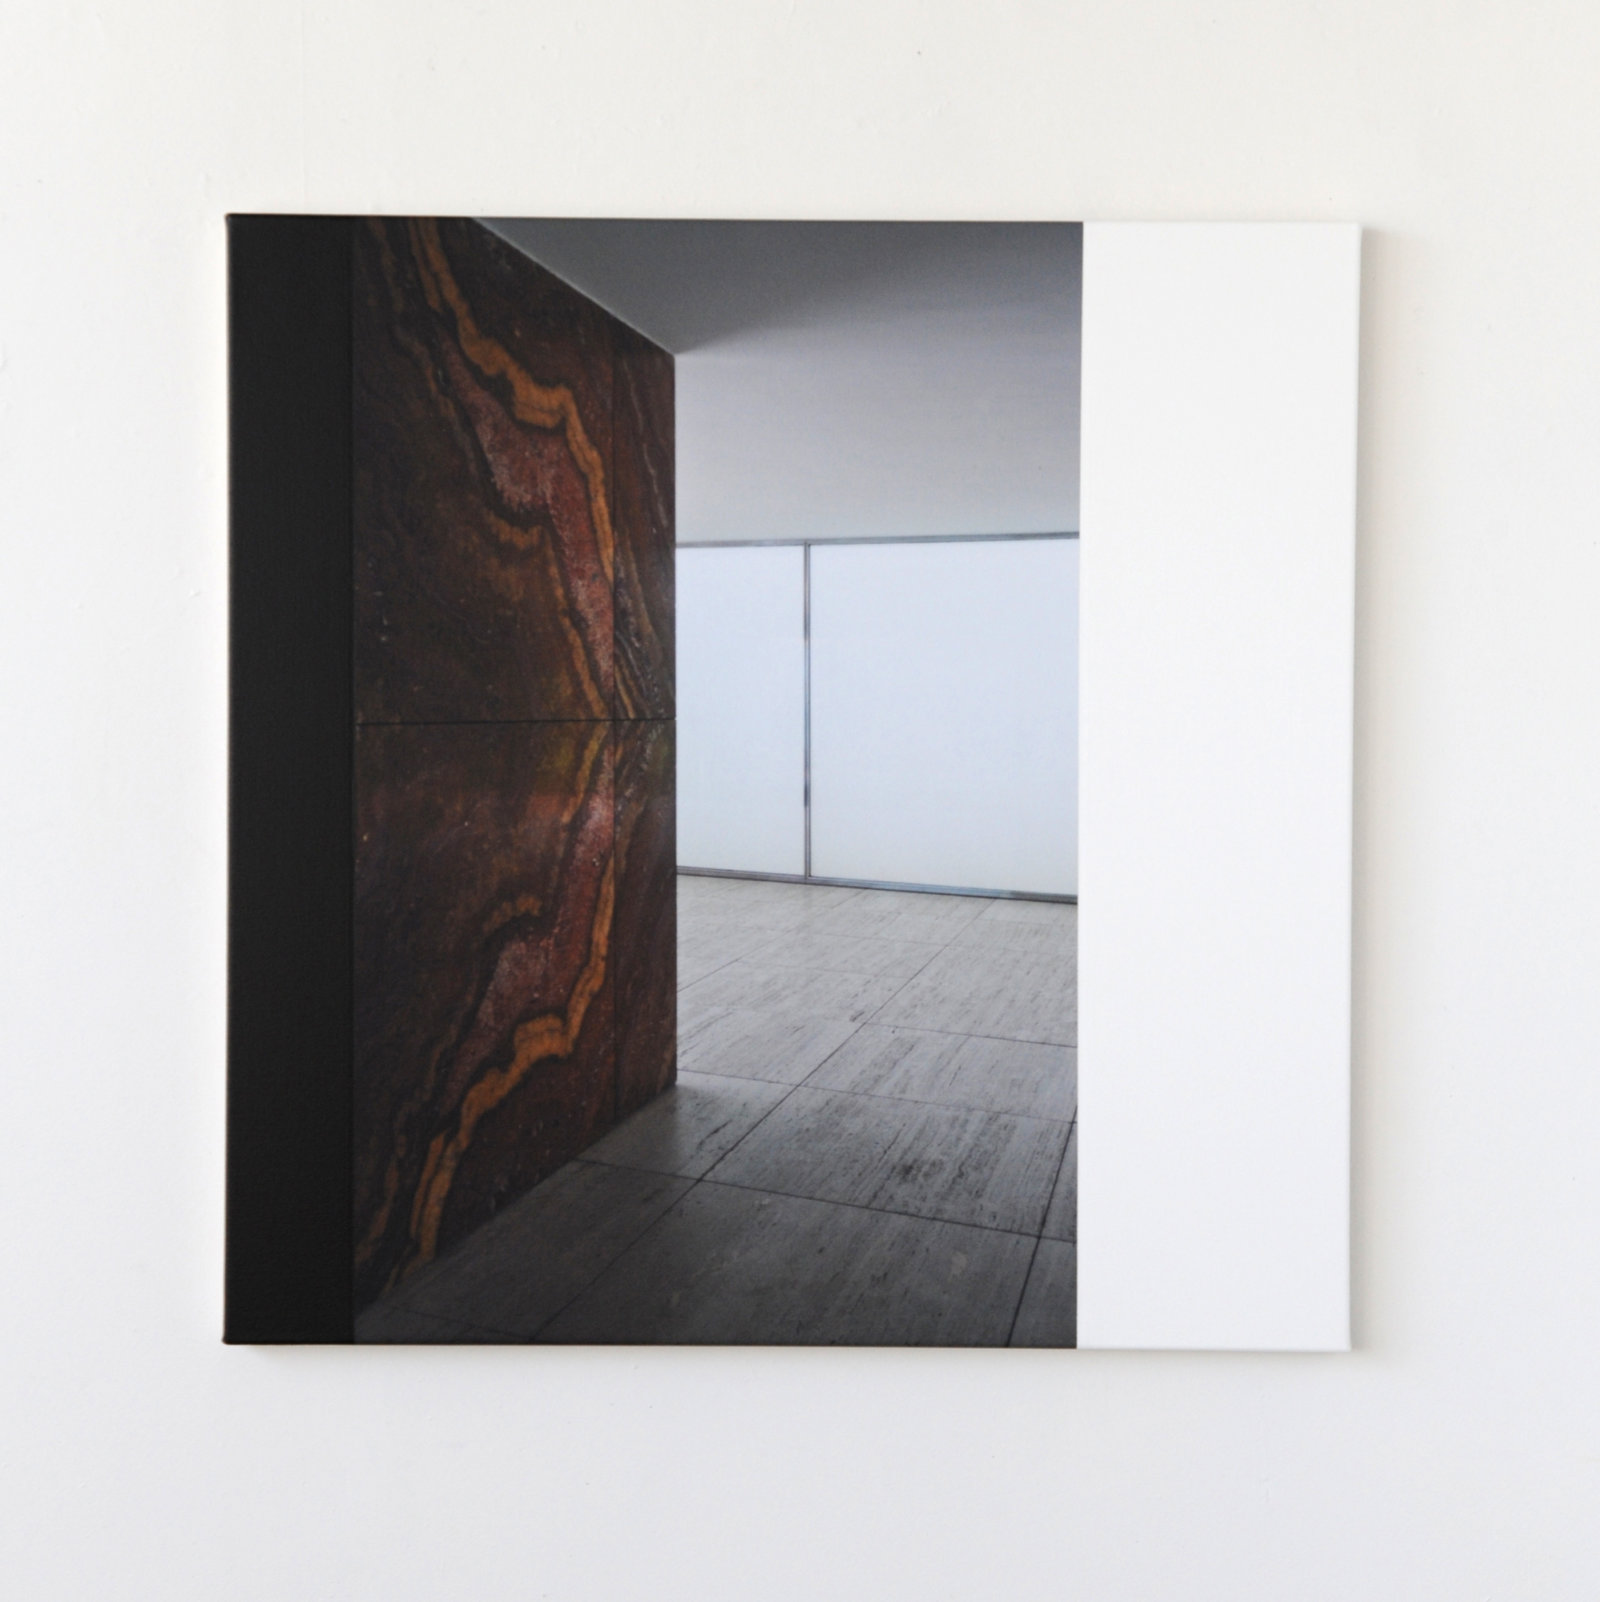 Ian Wallace, Mies Pavilion Barcelona II, 2009, photolaminate with acrylic on canvas36 x 36 in. (92 x 92 cm)